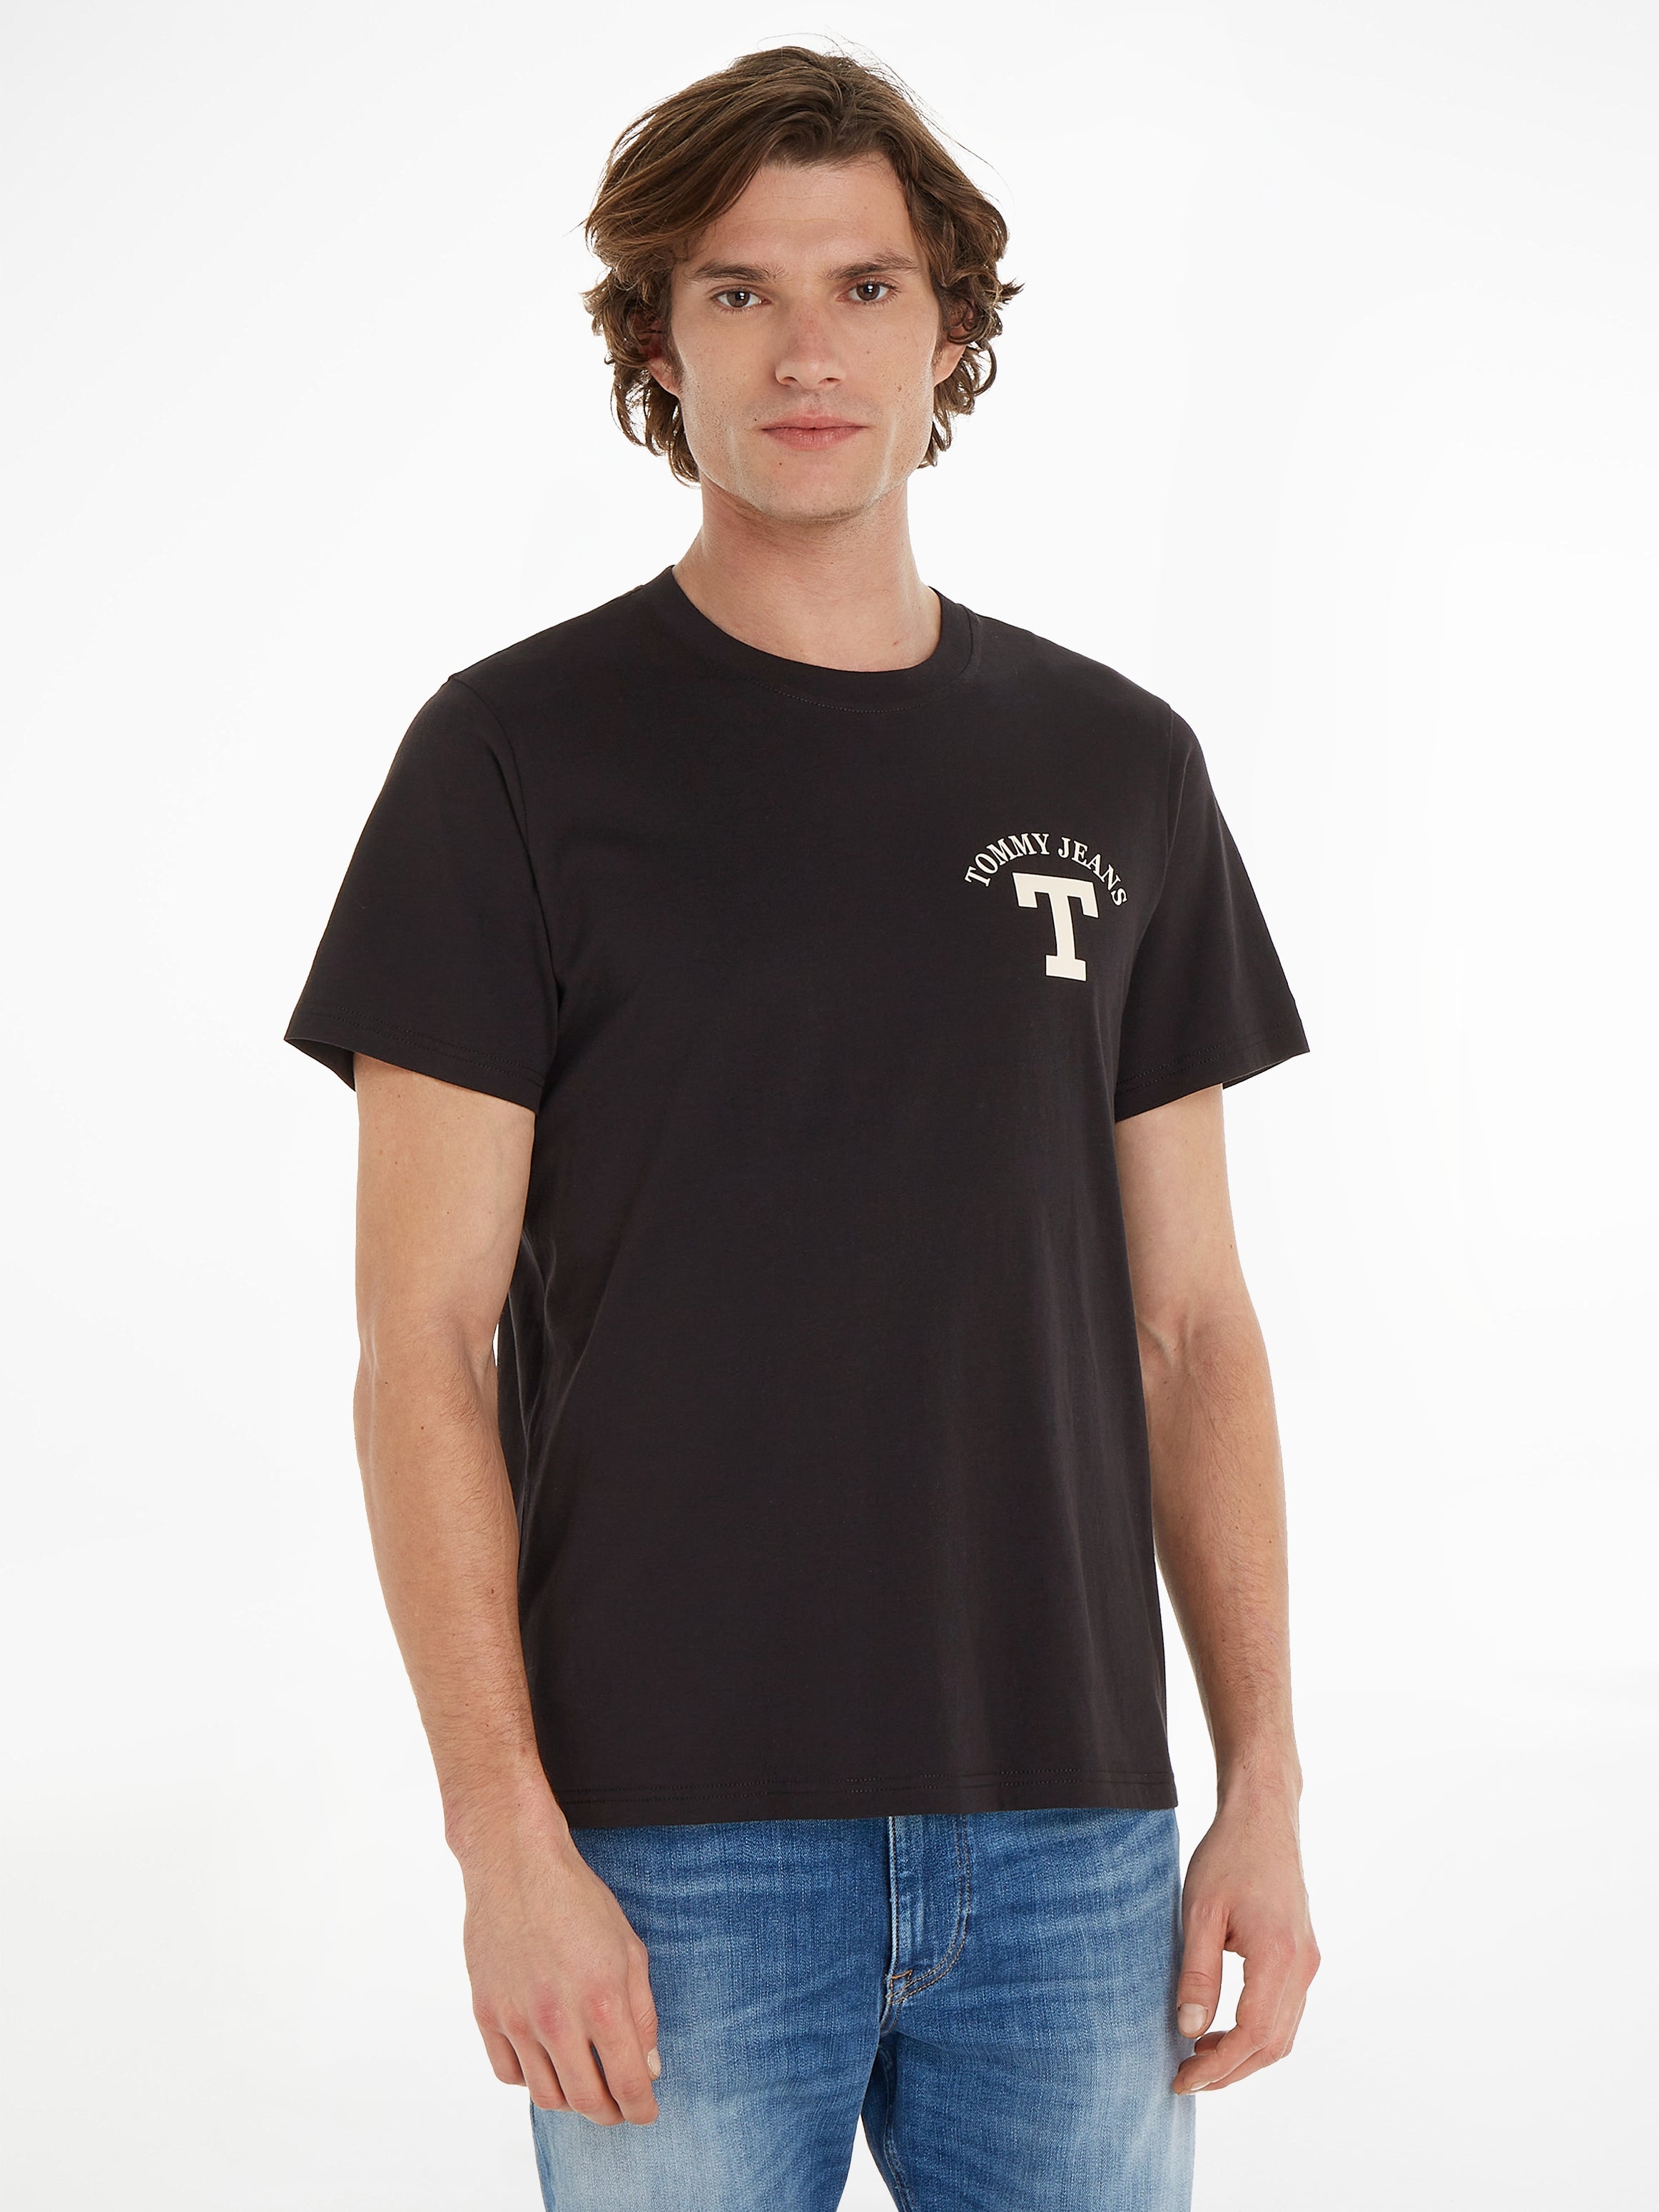 Tommy Jeans Curved Letterman T-Shirt - for Galvin Men - Black